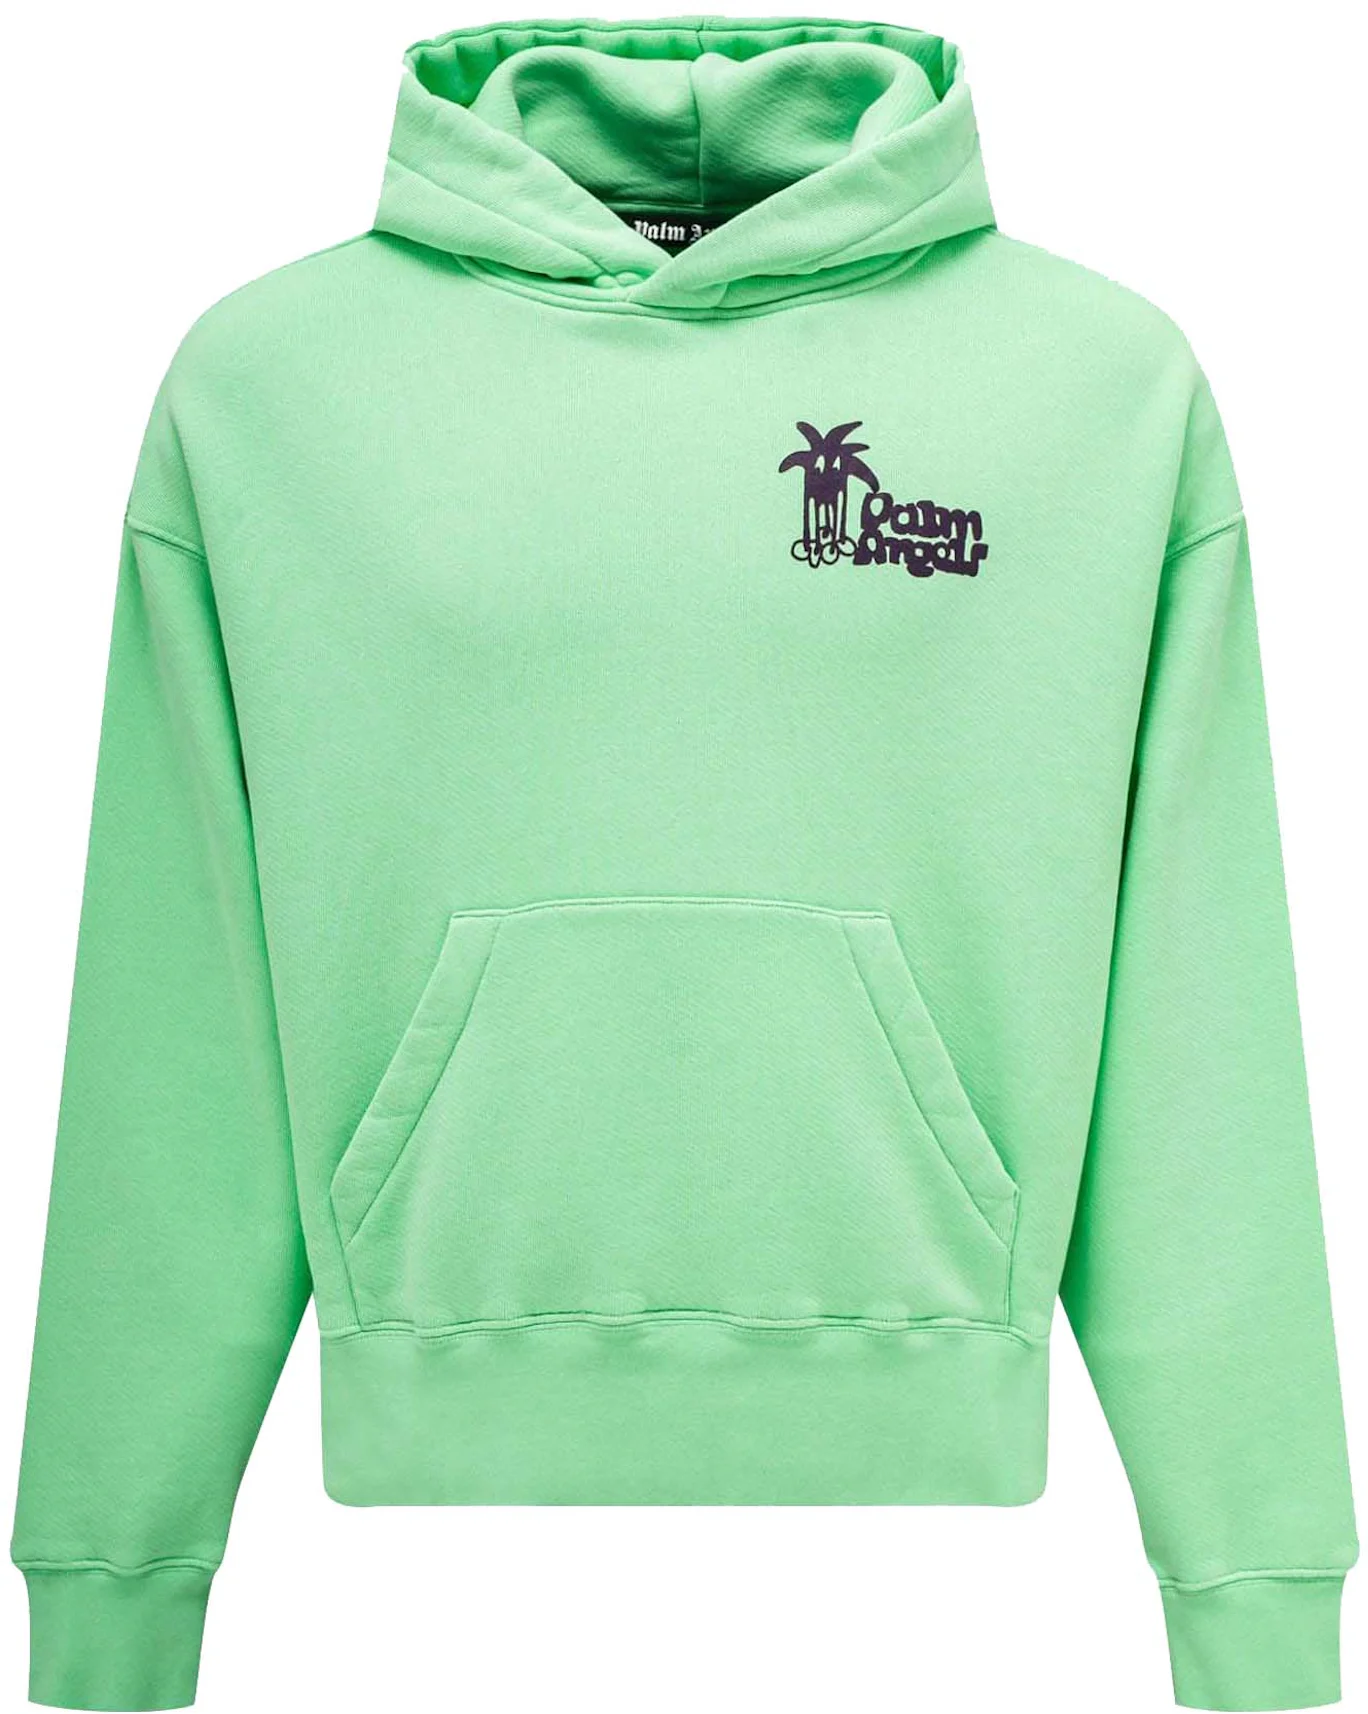 Luxury men's sweatshirt - Palm Angels green hooded sweatshirt with paint  green